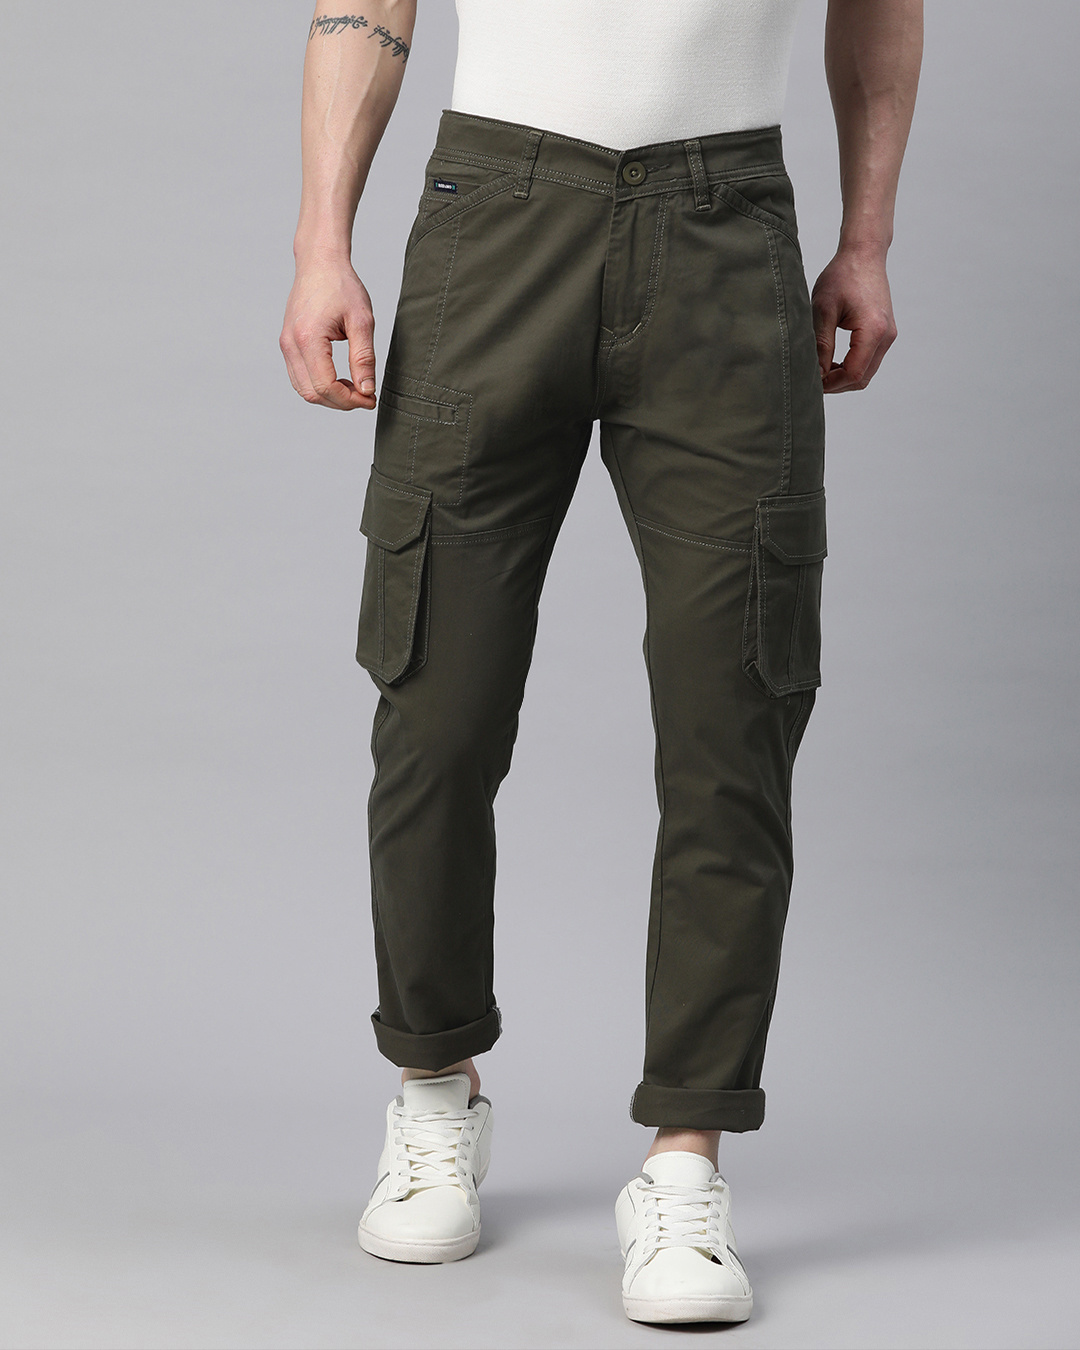 Buy Men's Olive Green Slim Fit Cargo Pants Online at Bewakoof